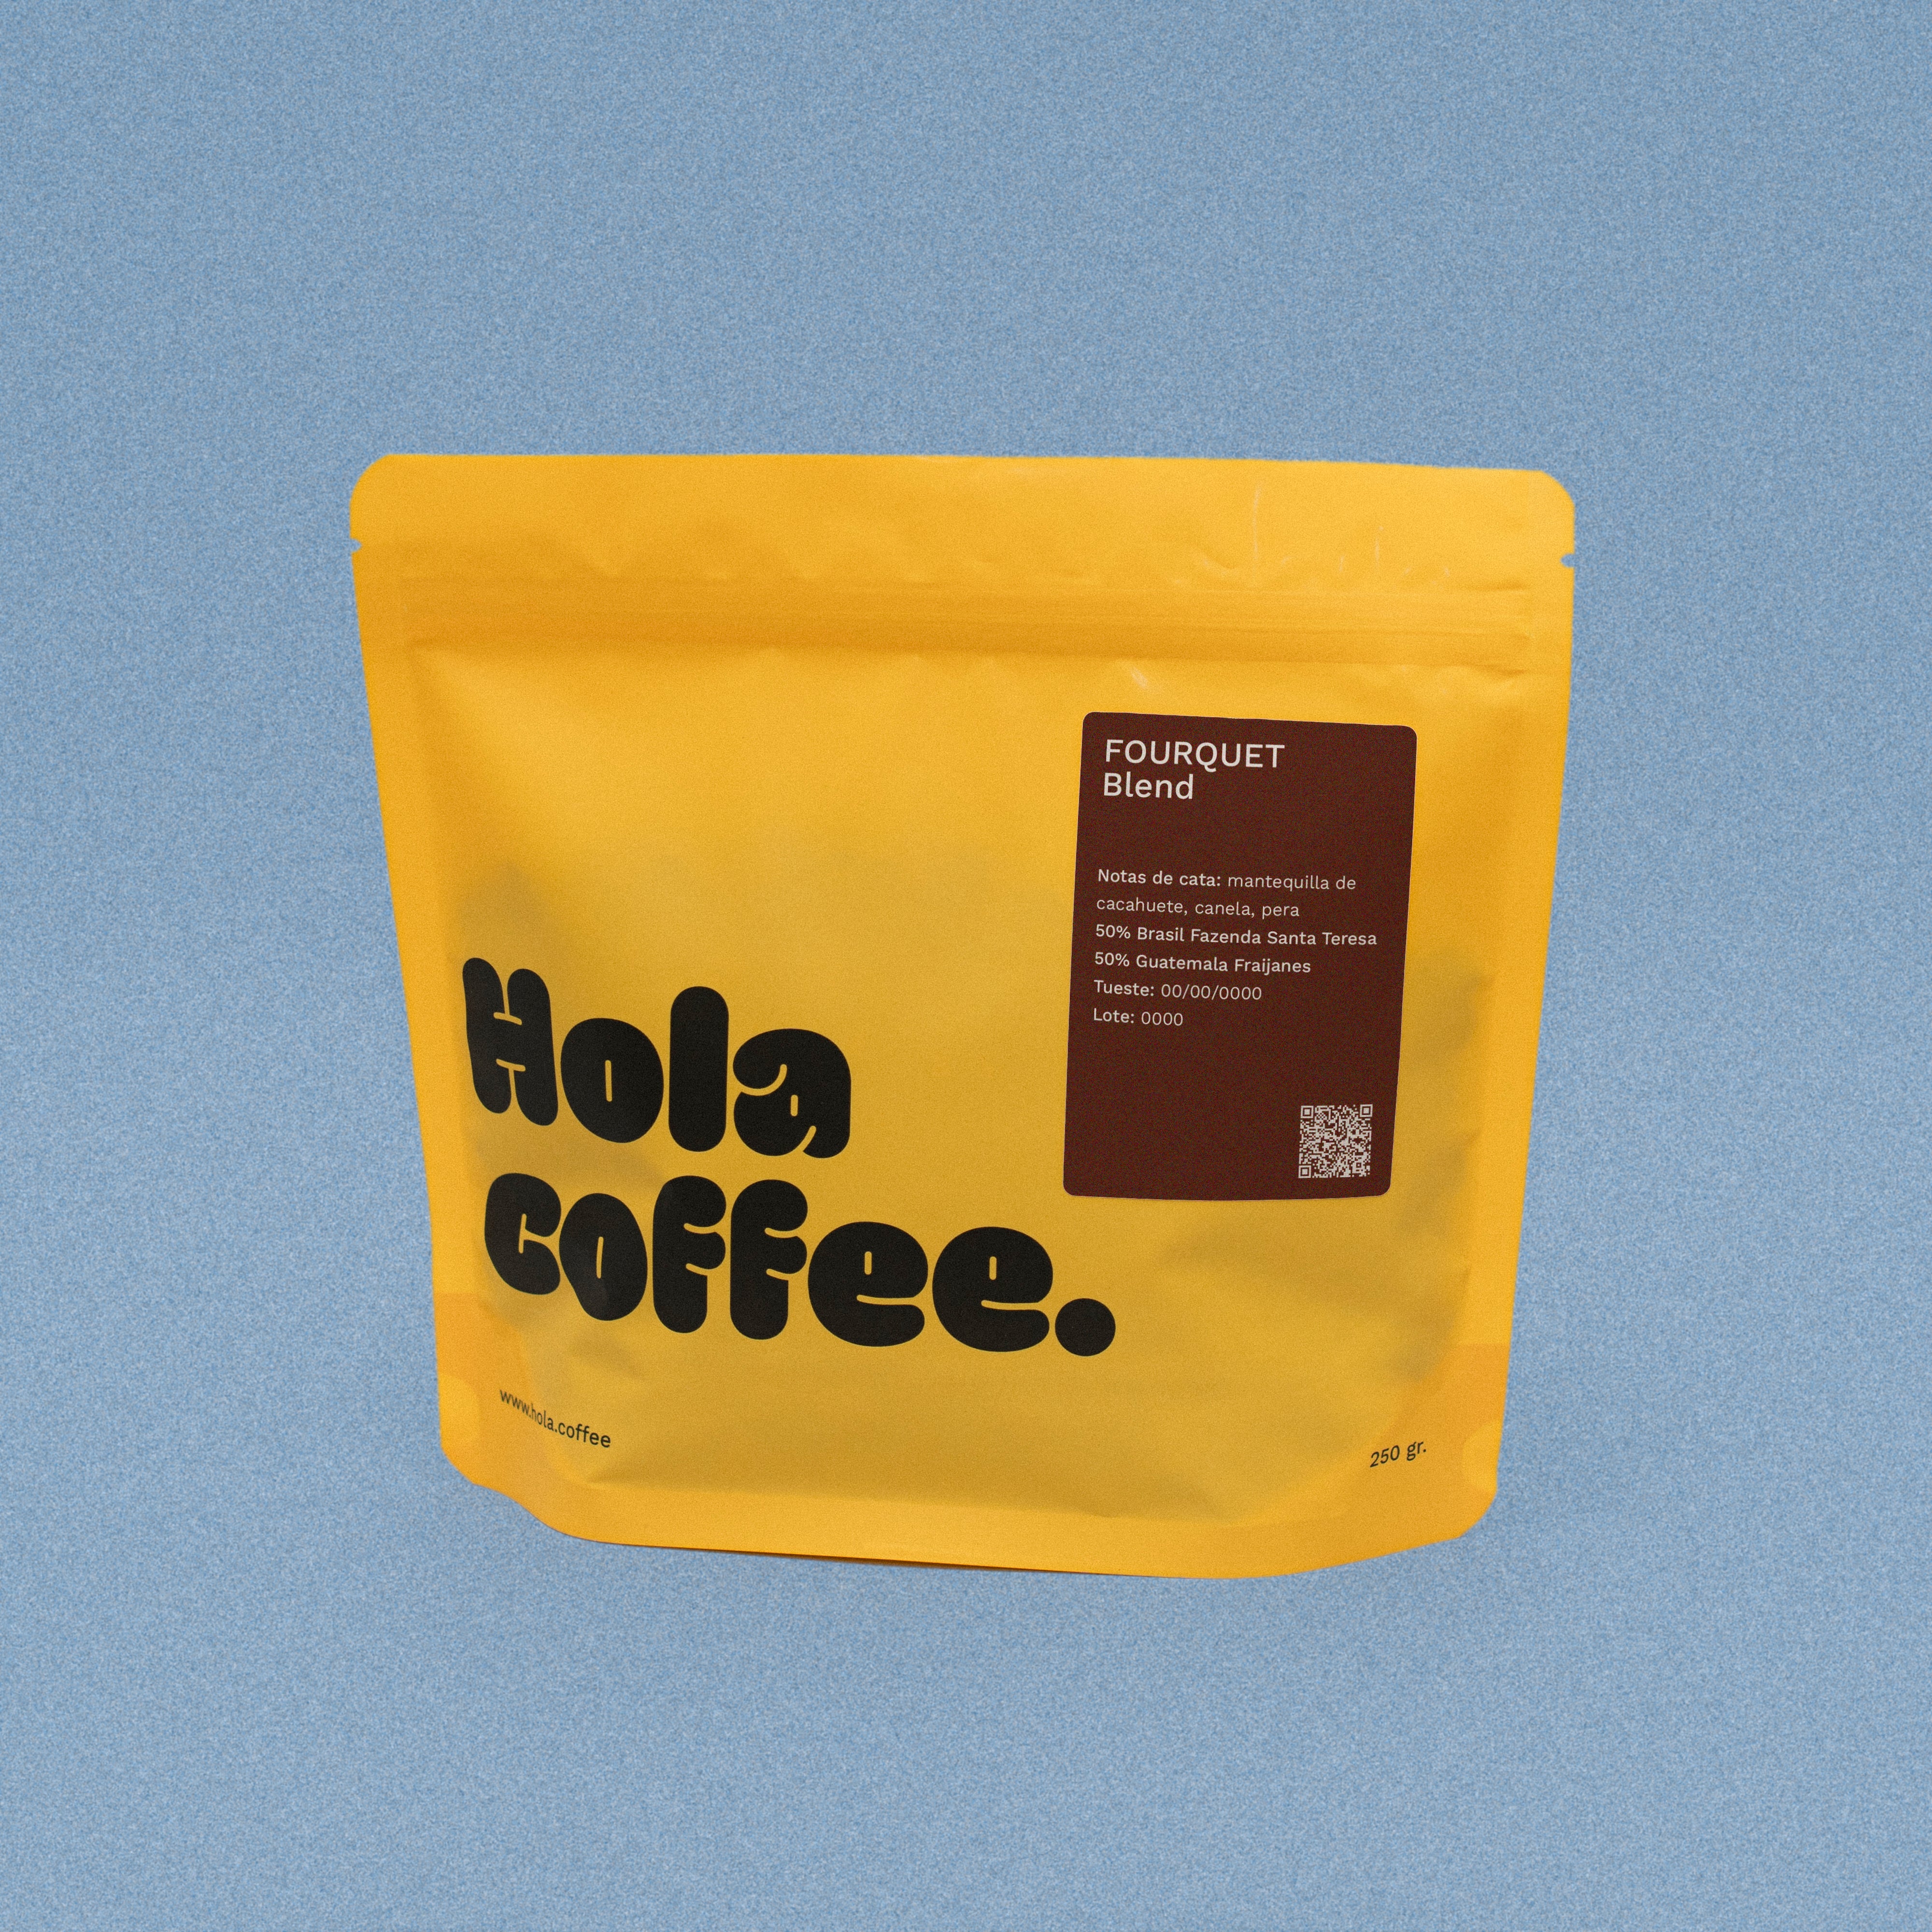 Fourquet Blend – Hola Coffee Roasters